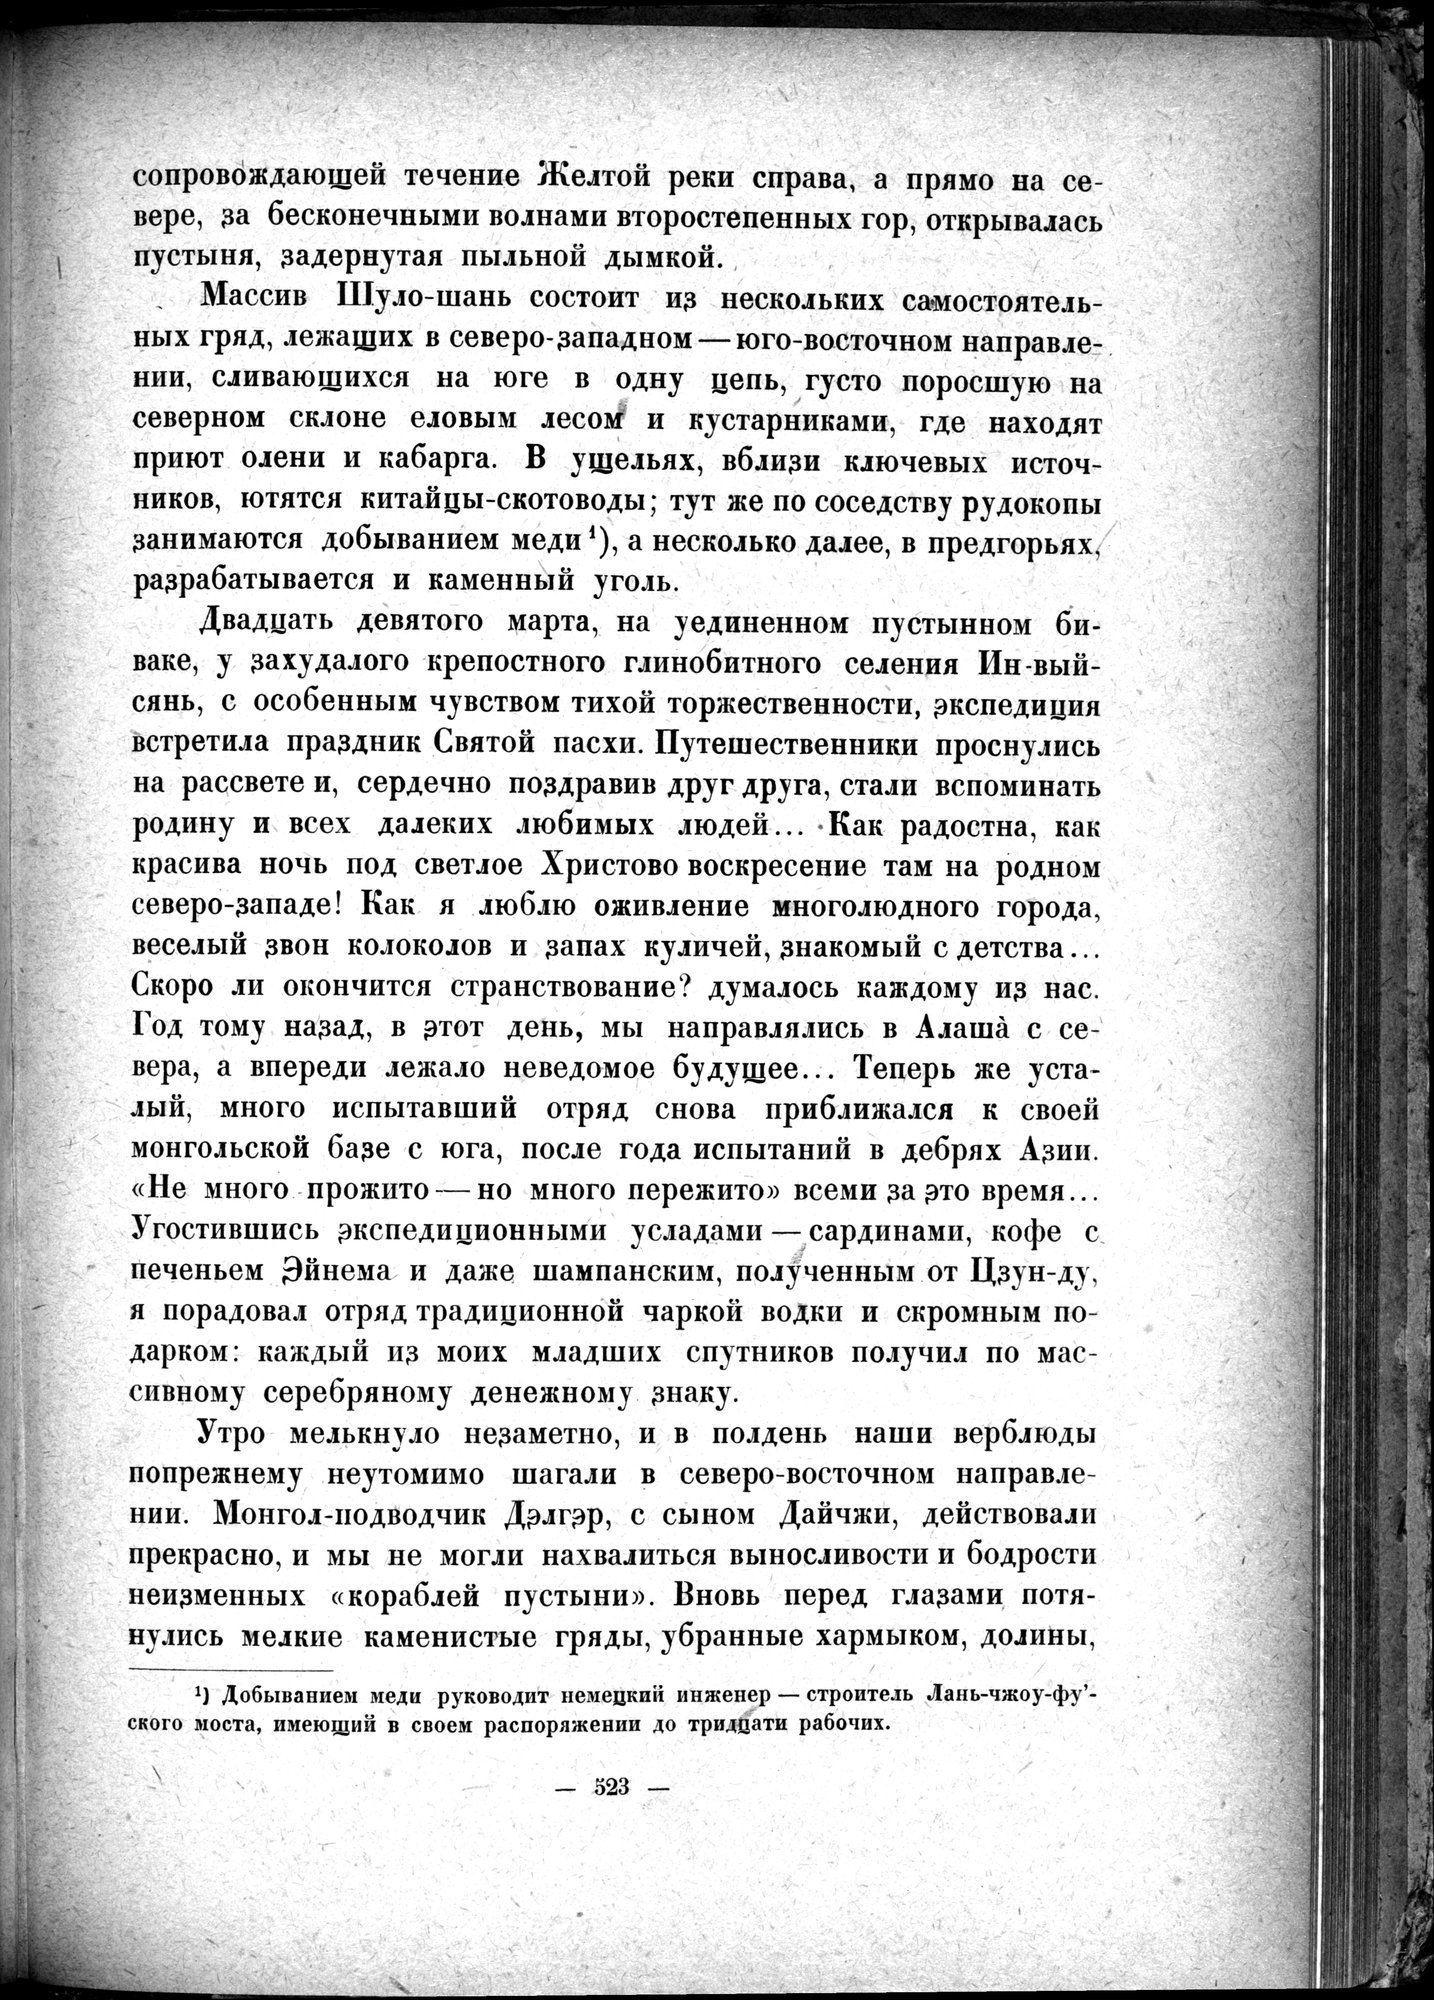 Mongoliya i Amdo i mertby gorod Khara-Khoto : vol.1 / Page 607 (Grayscale High Resolution Image)